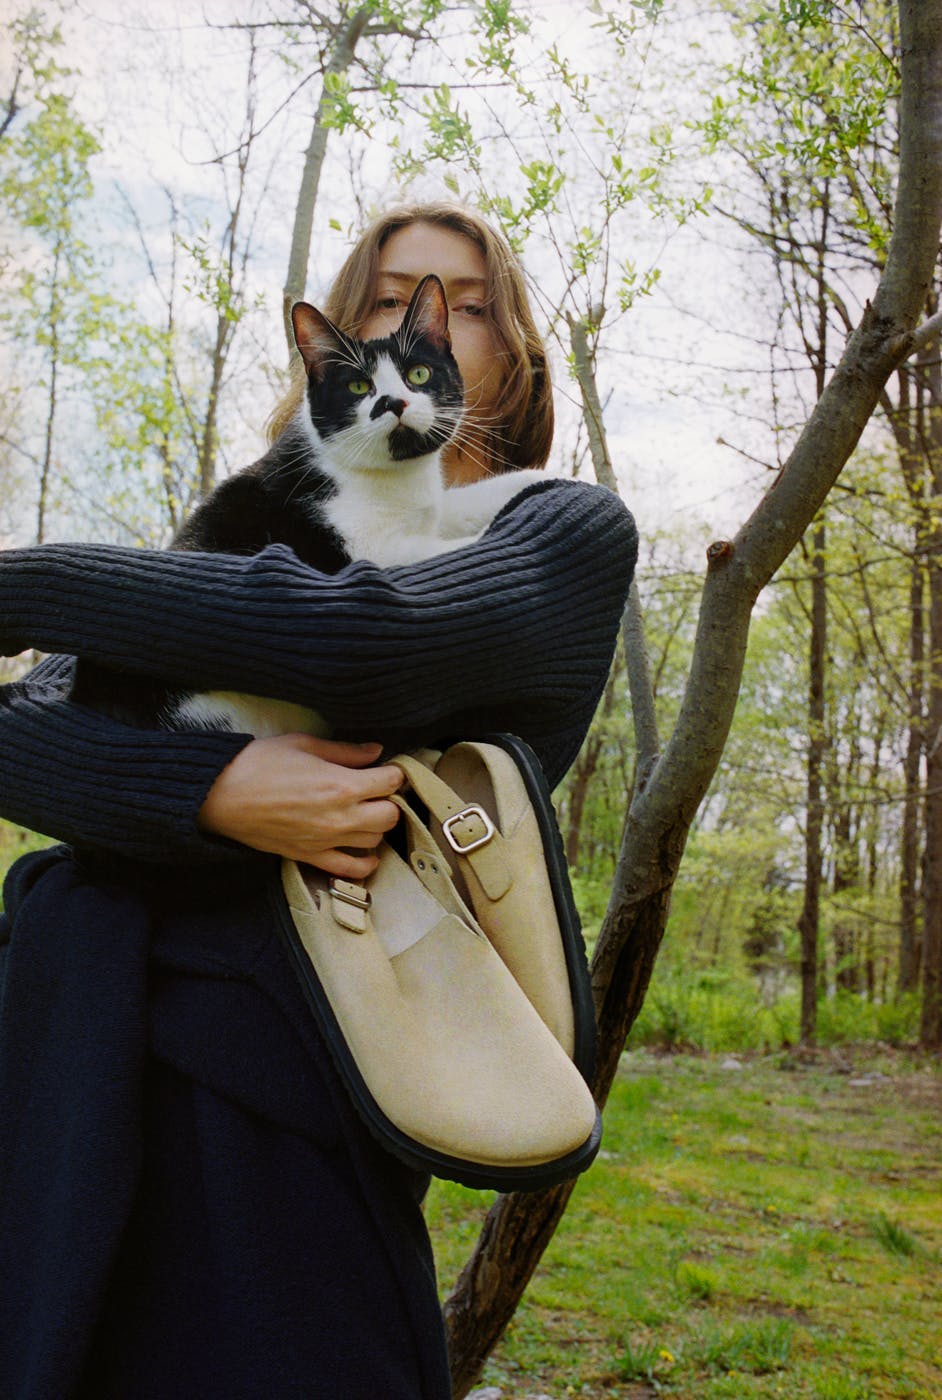 bag handbag adult female person woman knitwear sweater tree cat